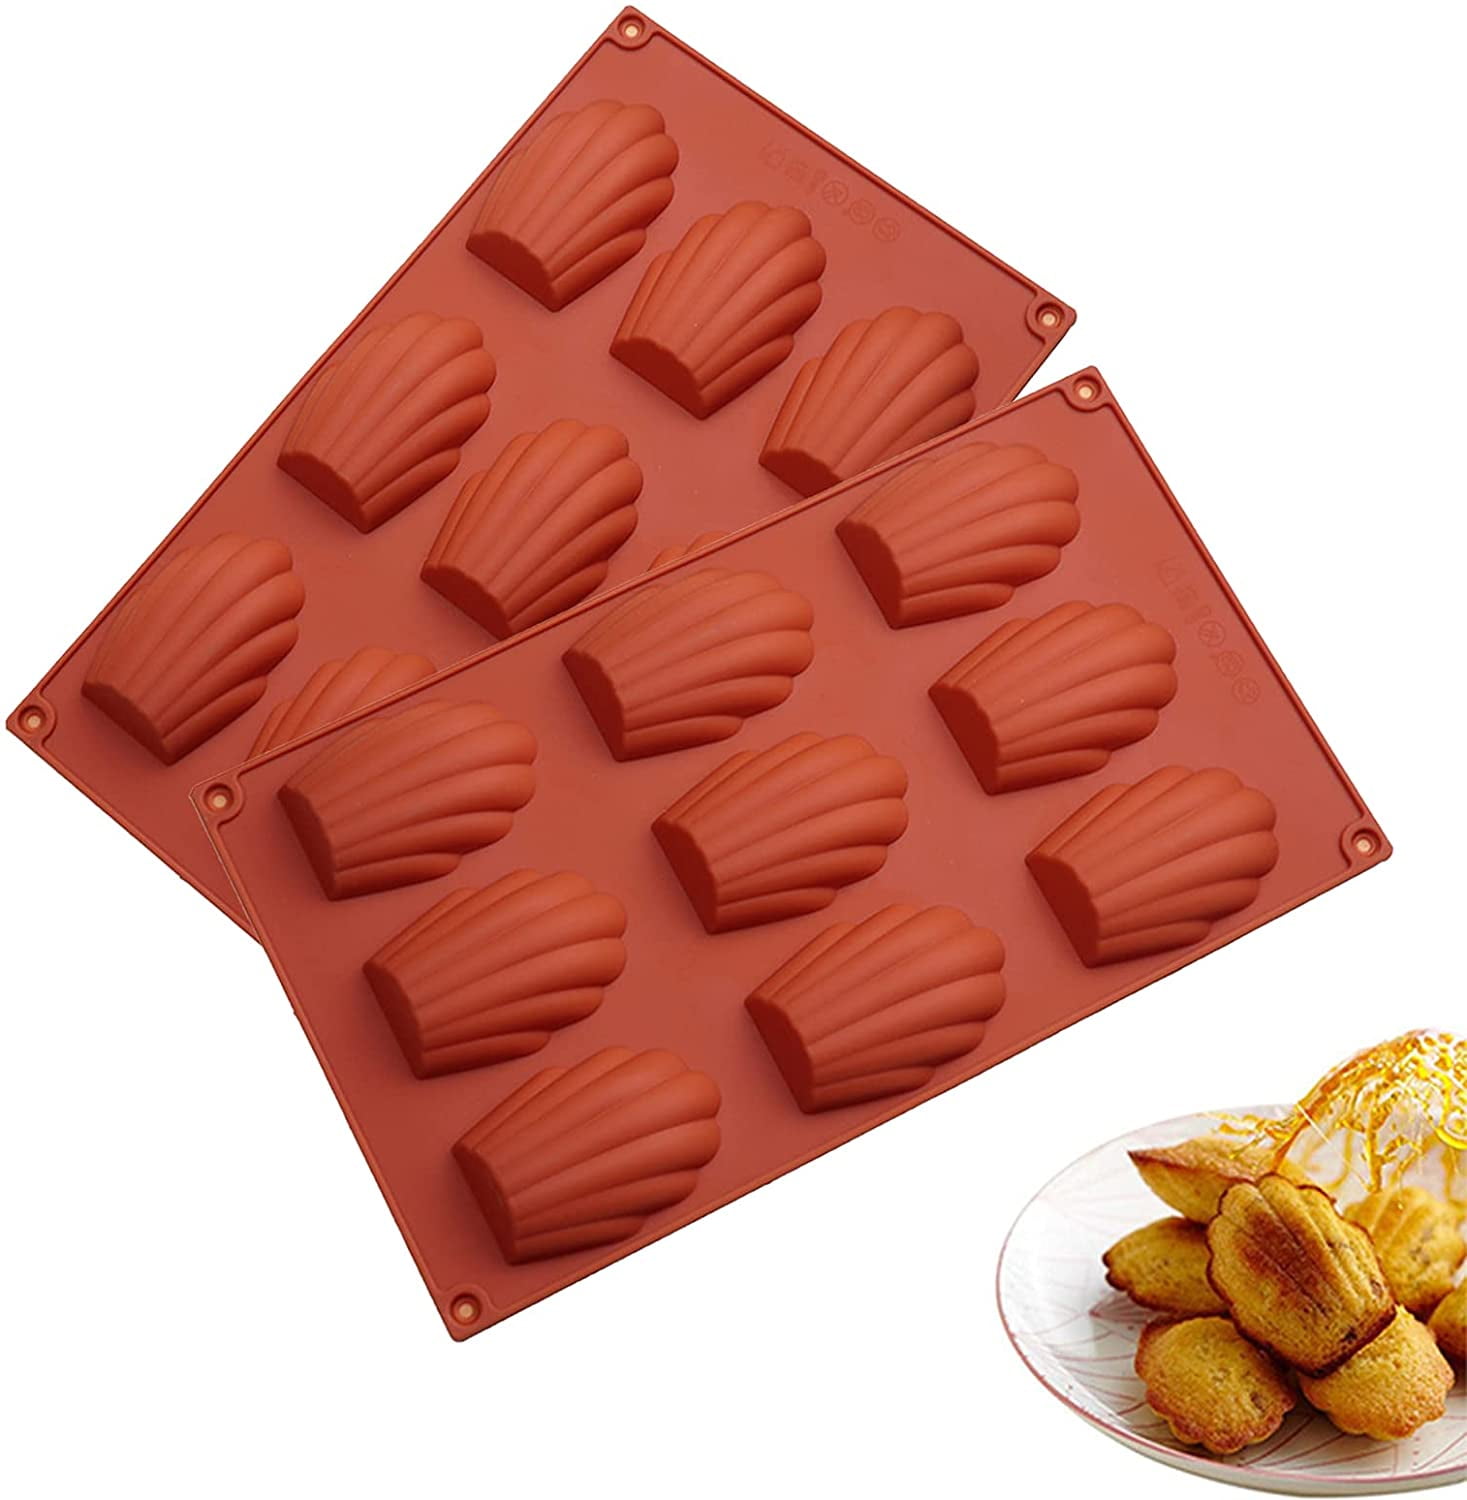 9“Silicone Flexible Cake Cookies Mold Baking Bakeware Pan Wax Dish Tray BPA-free 